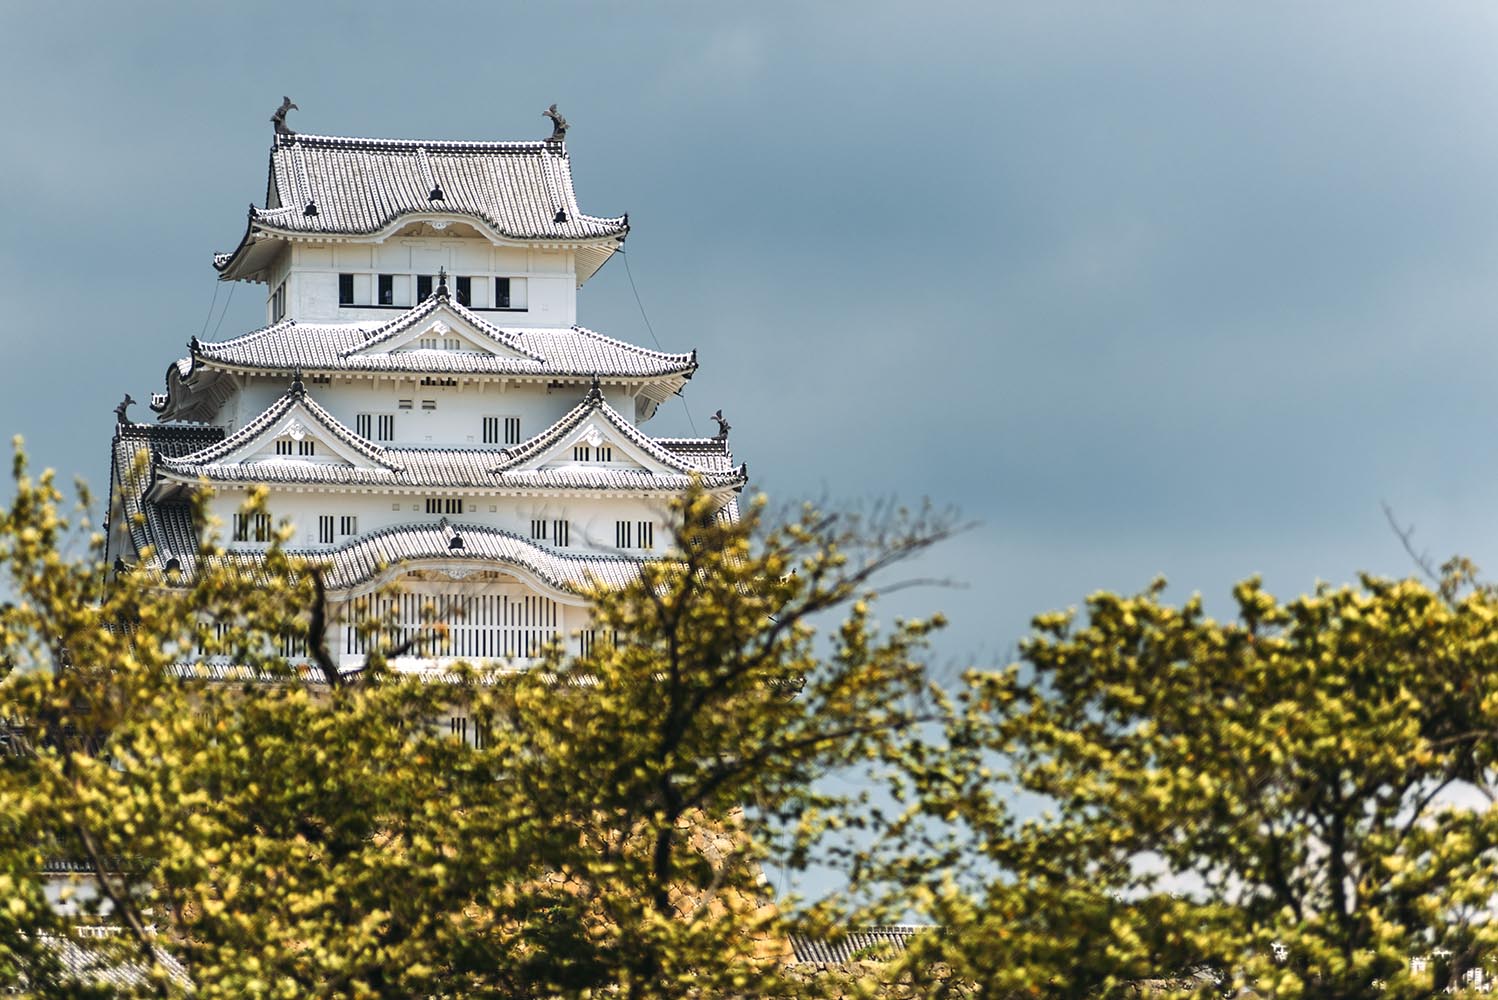 The 17th century Himeji Castle, UNESCO World Heritage Site, Hyog